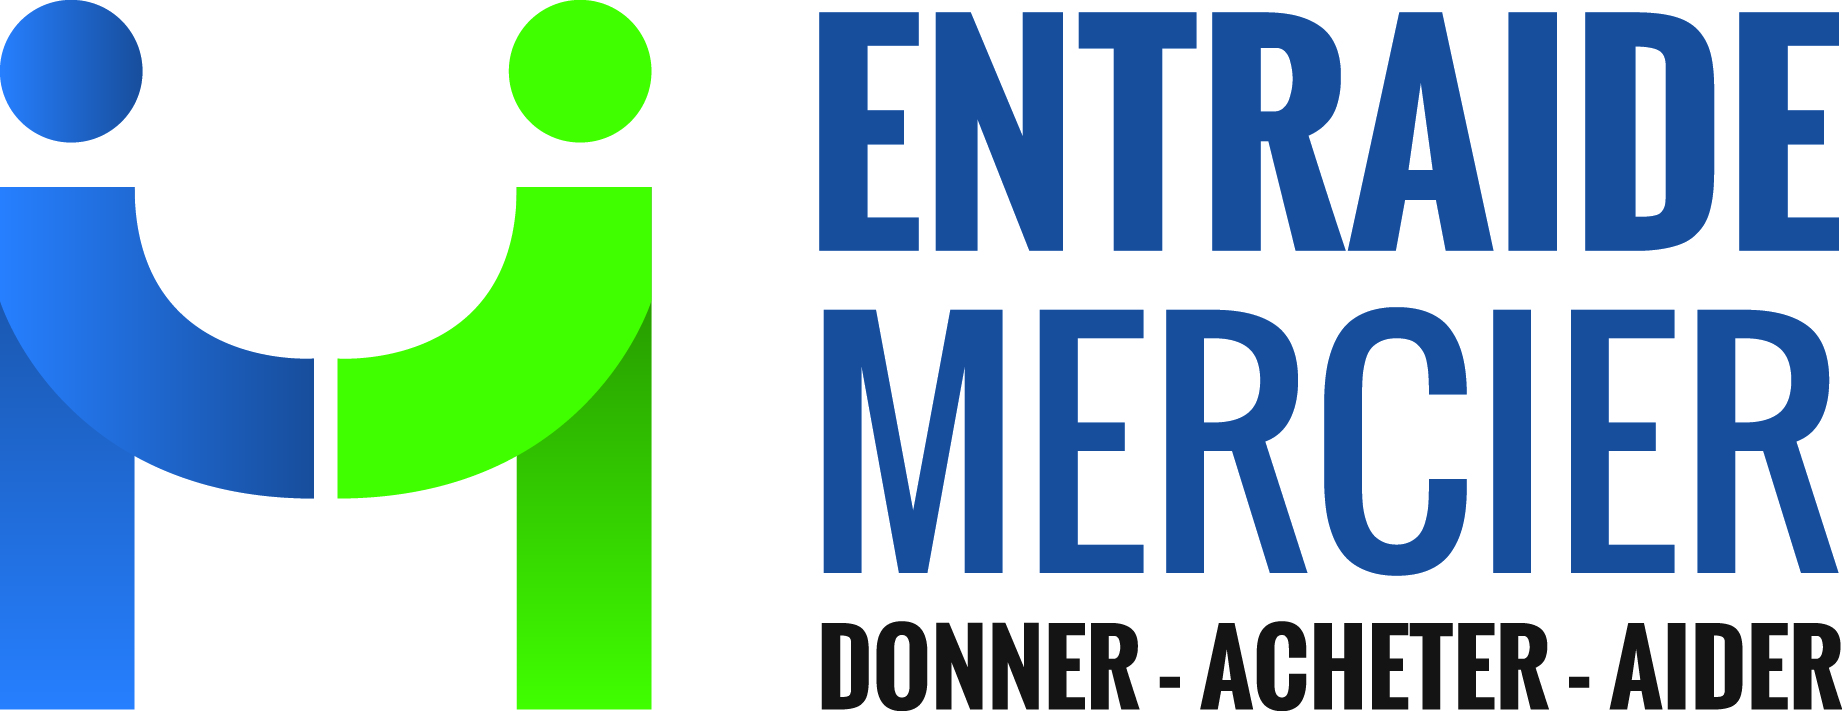 Entraide-mercier_logo_CMYK-2